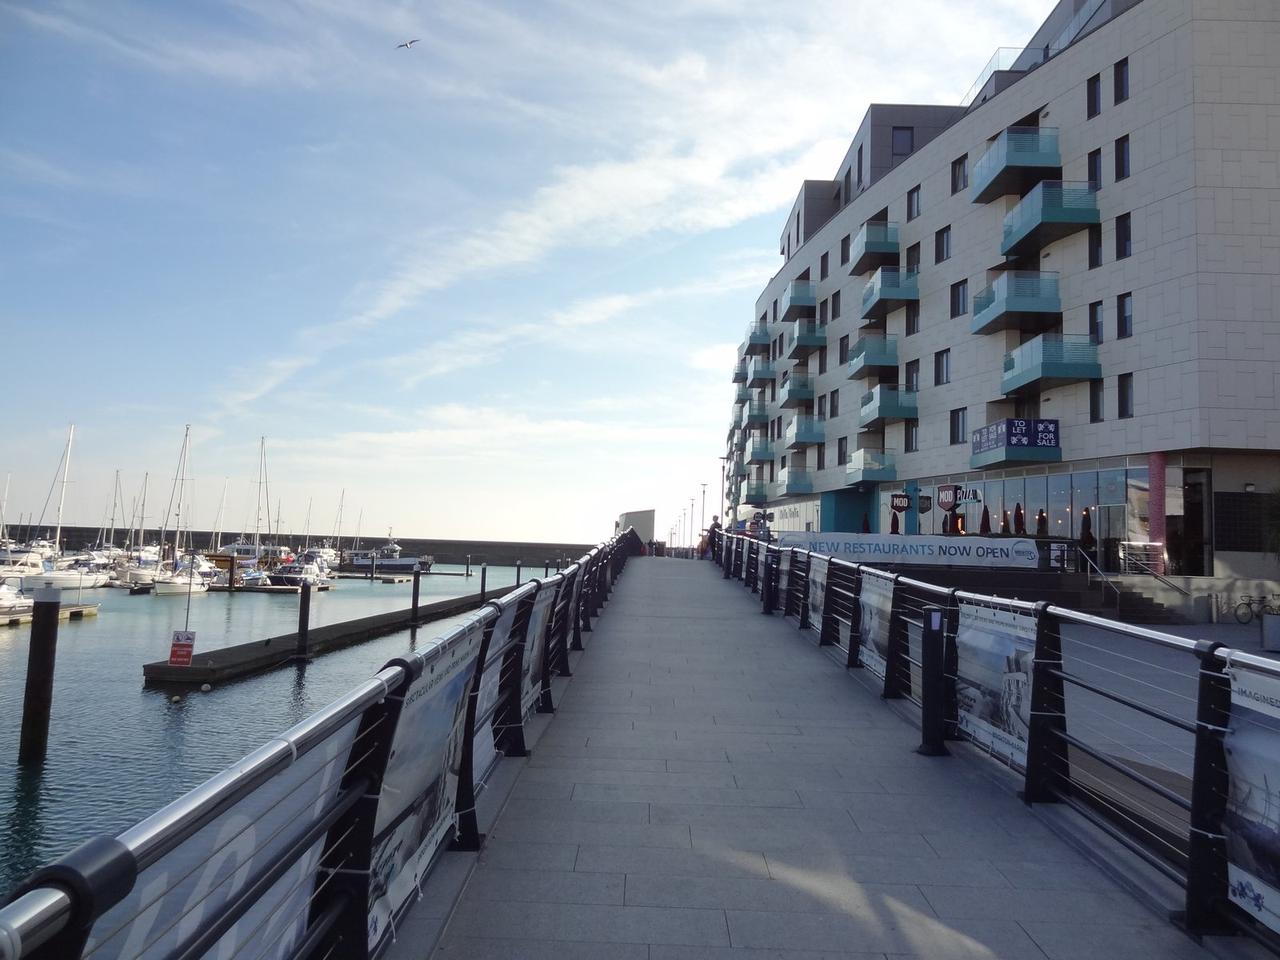 The Prestige Marina Apartment, Brighton & Hove Images - 15